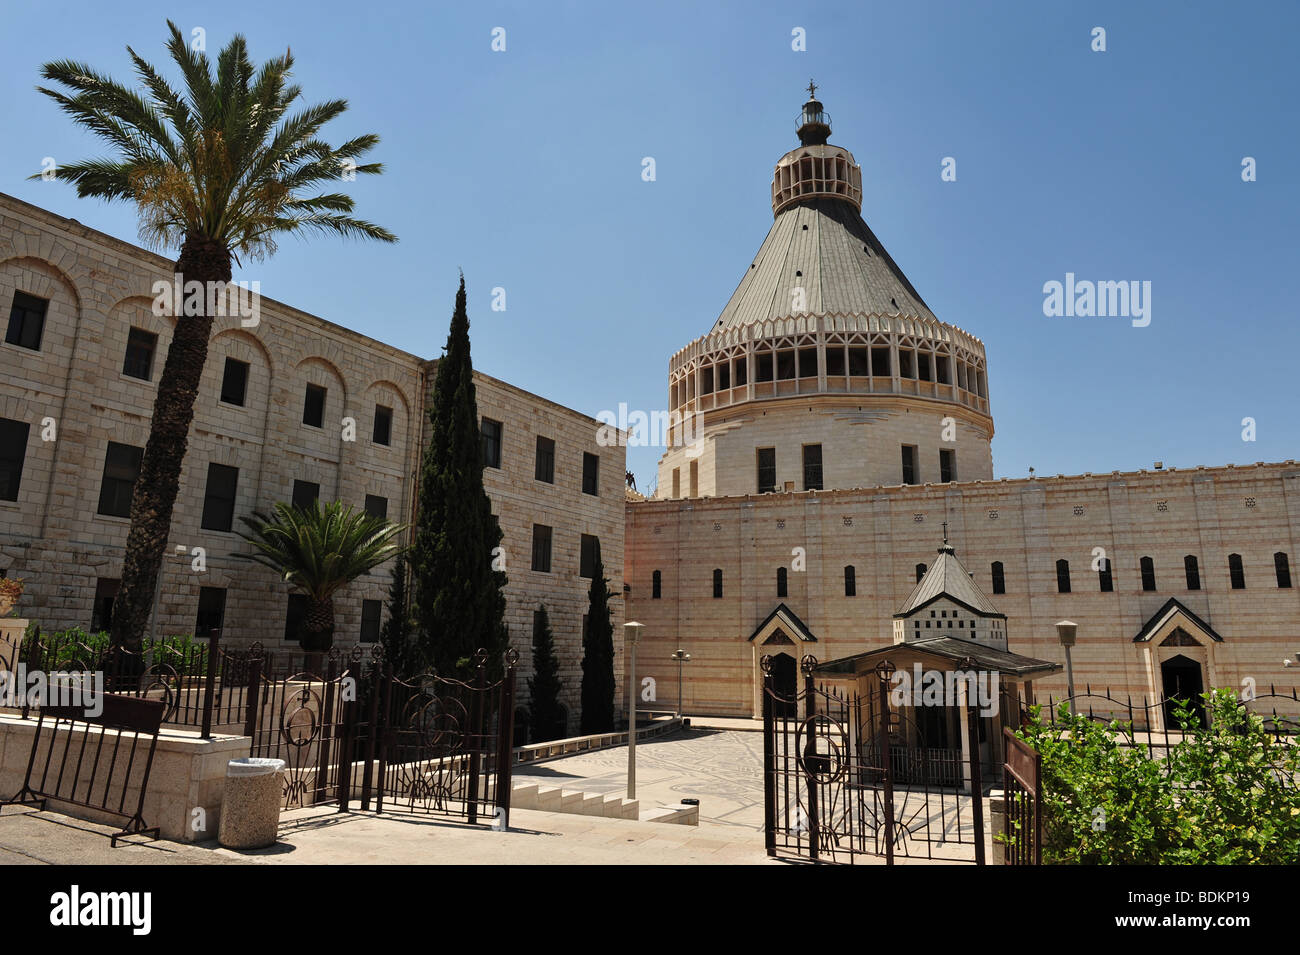 Basilica of the Annunciation, Nazareth, Israel Stock Photo, Royalty ...